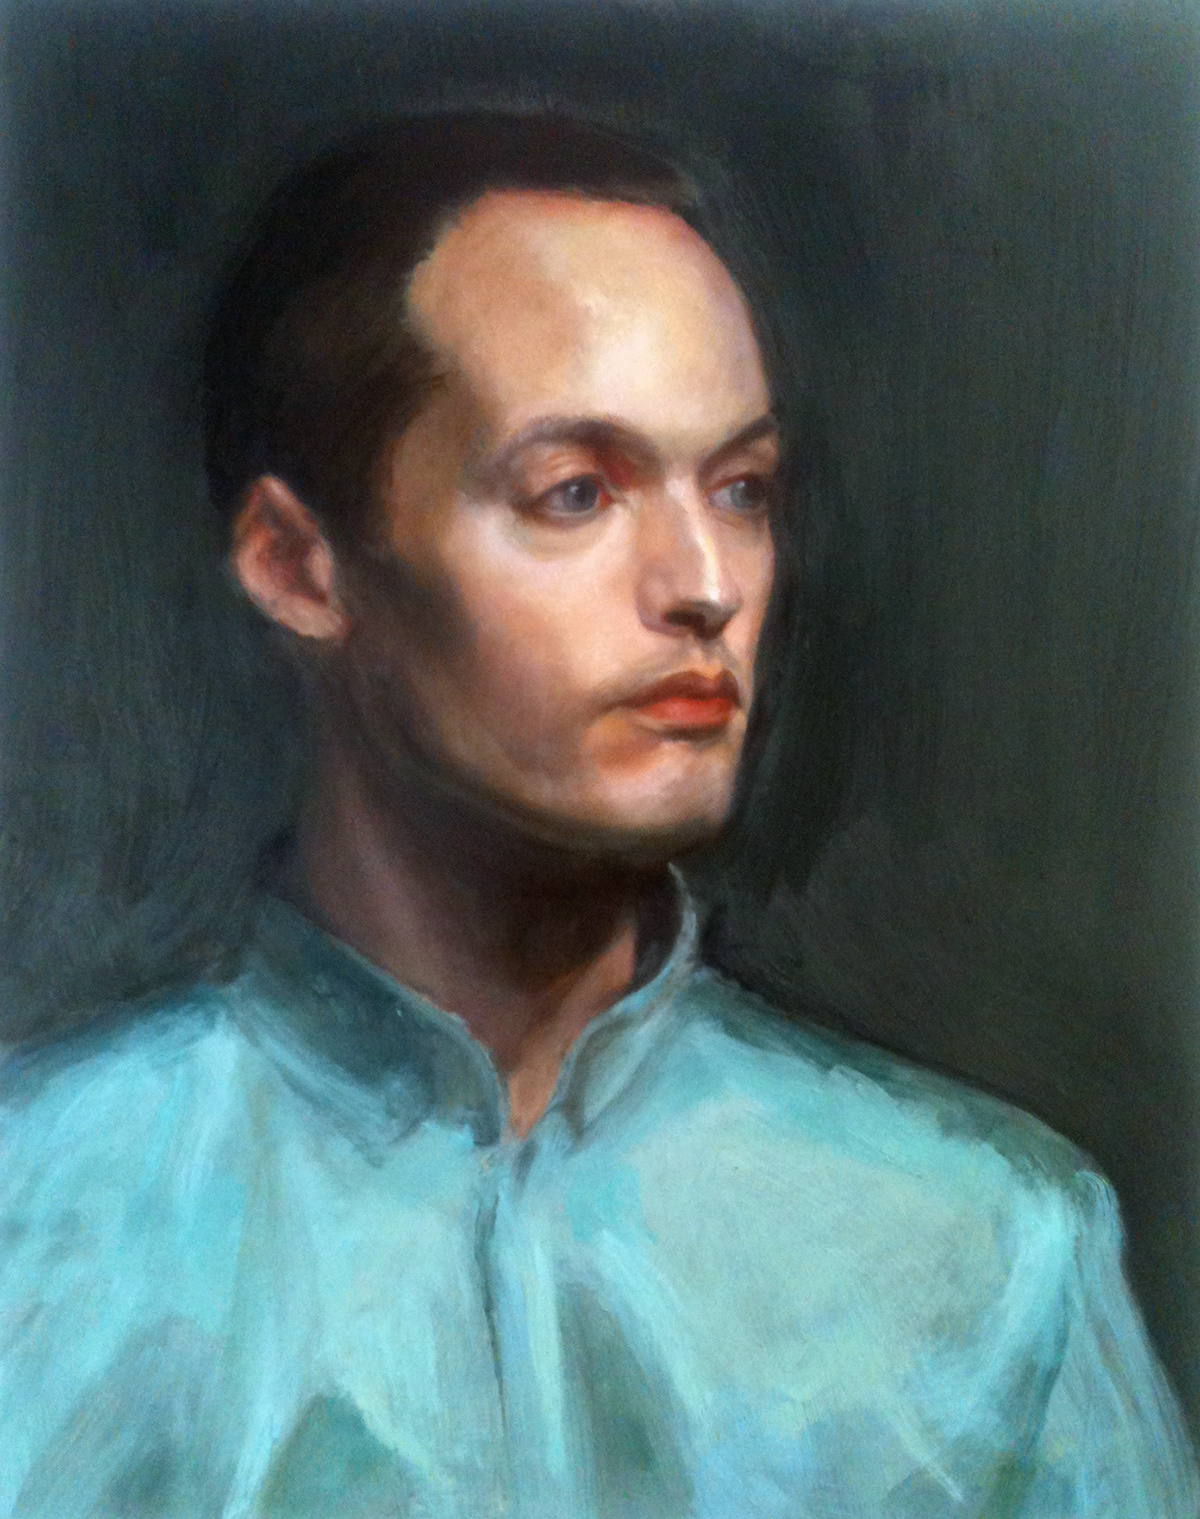 portrait oil Realism realistic figures Classical academic man woman sitting